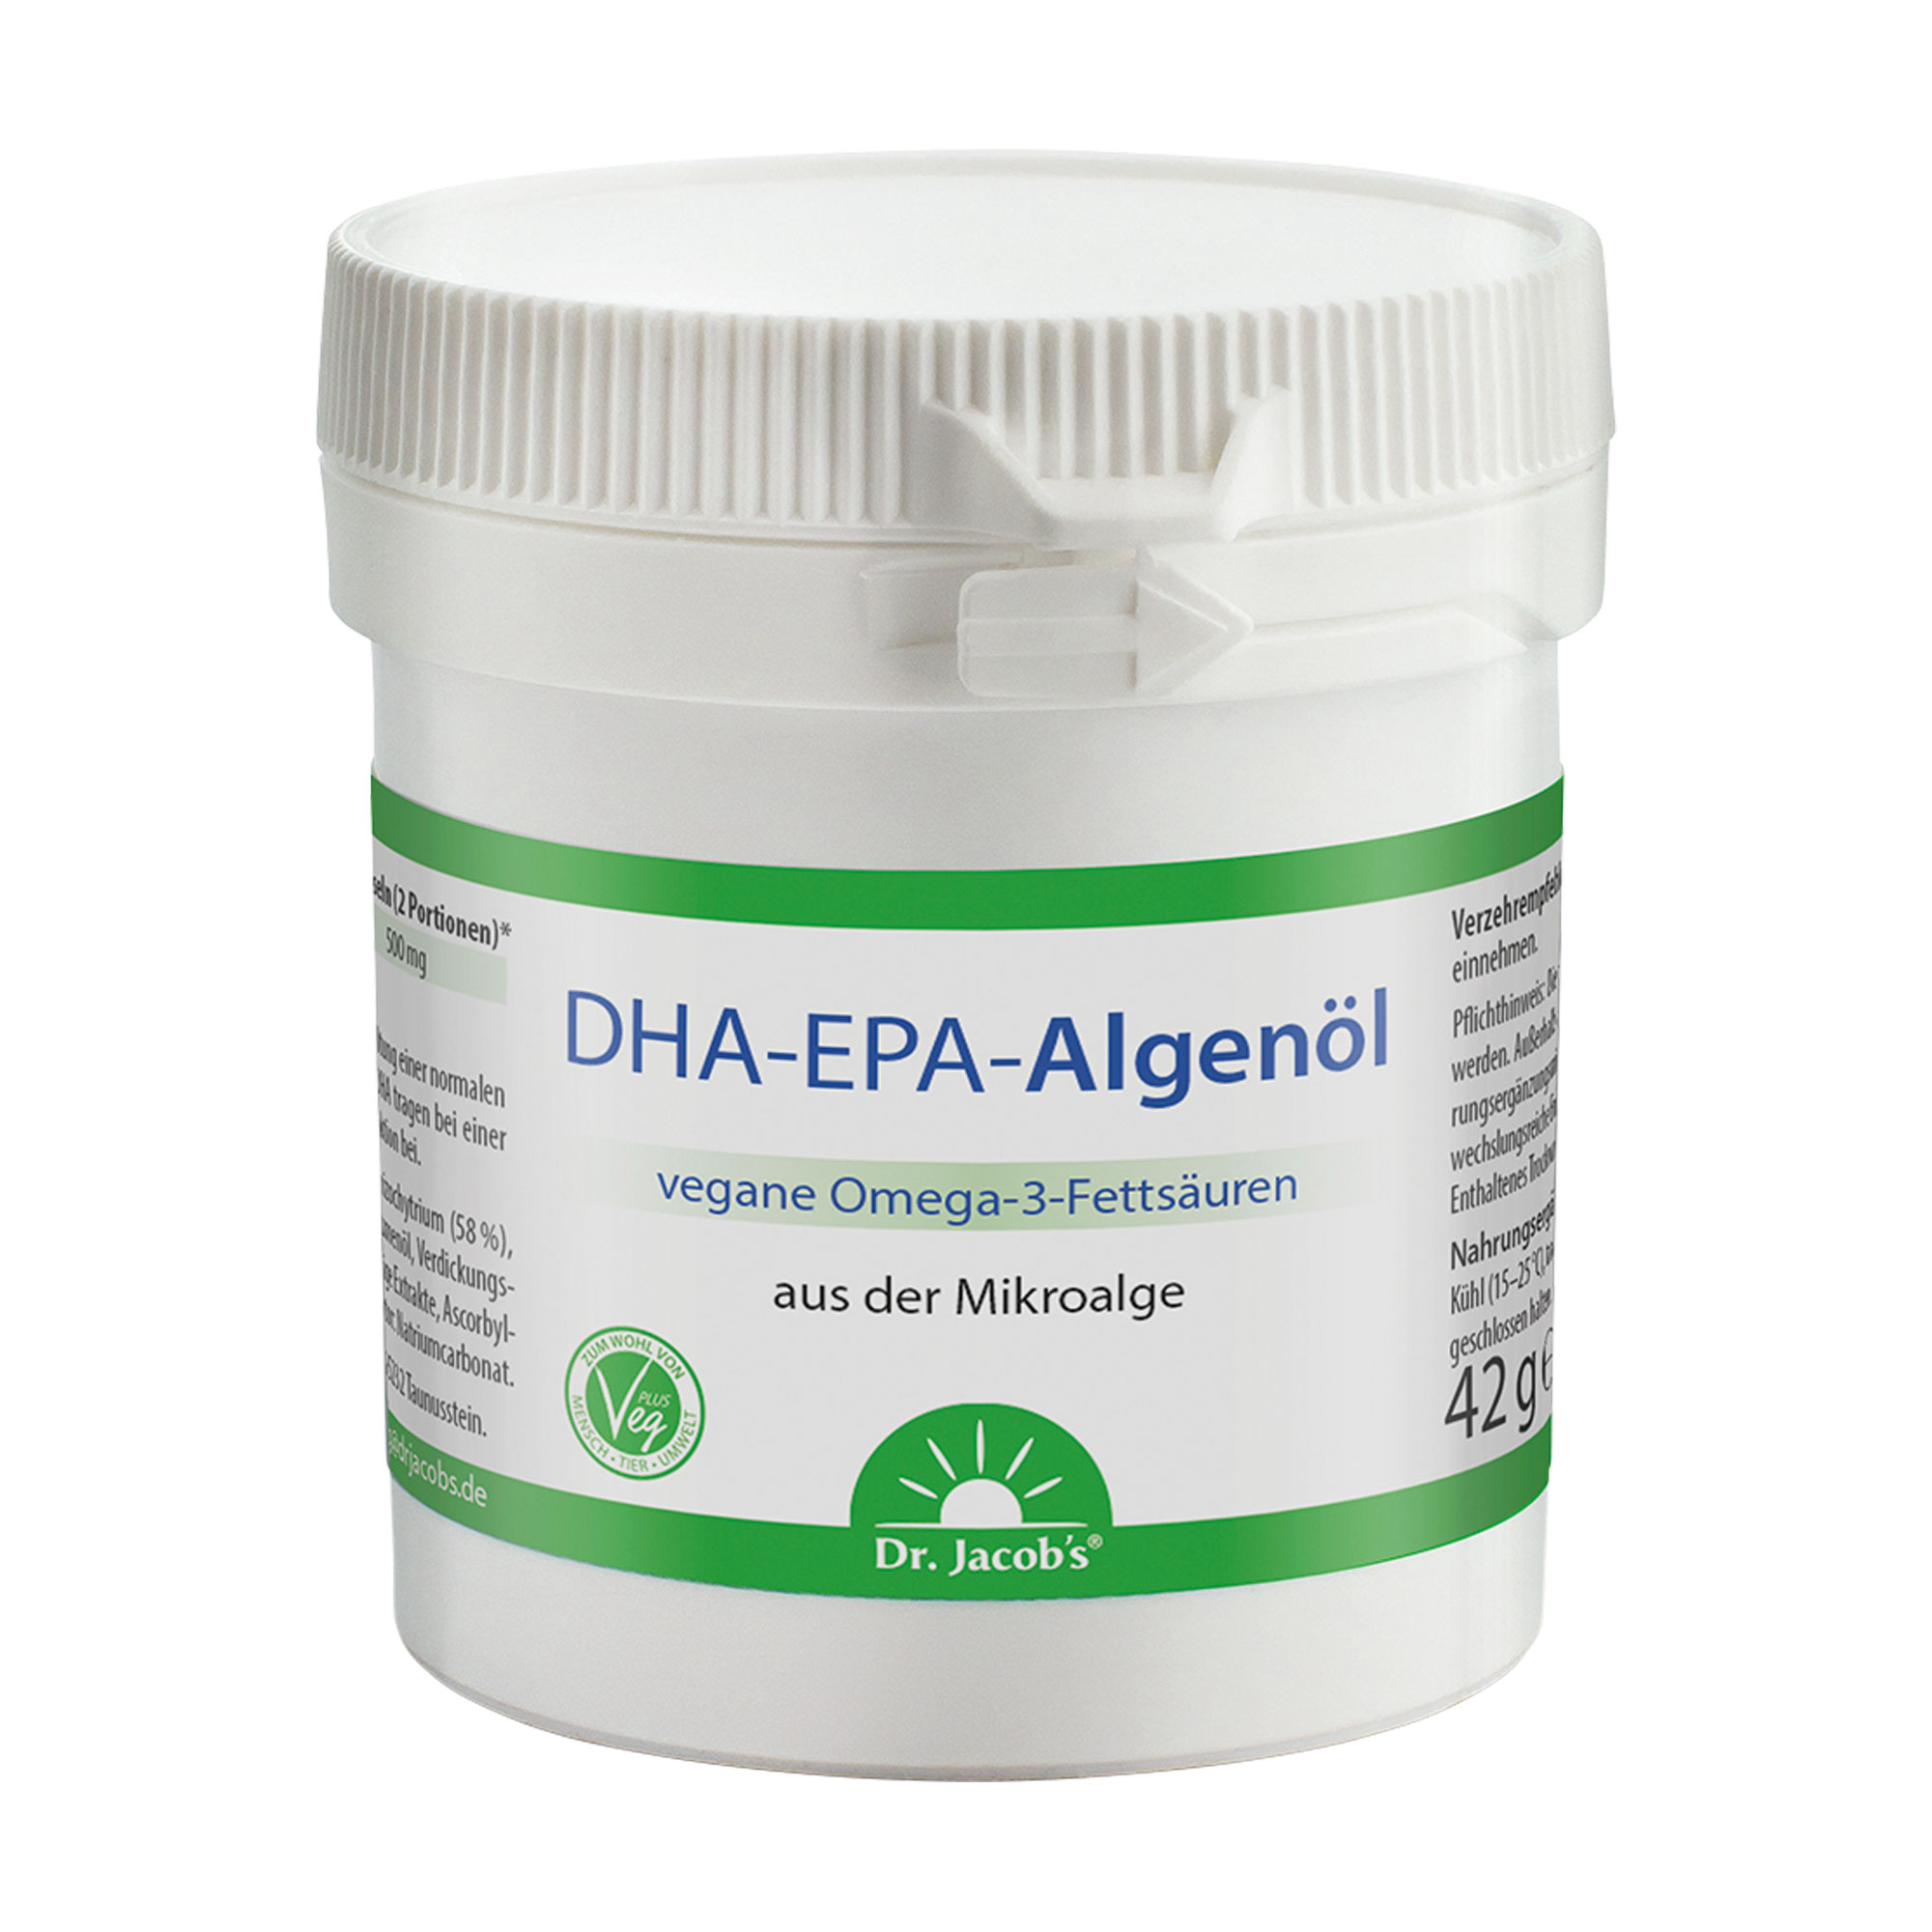 Nahrungsergänzungsmittel mit veganen Omega-3-Fettsäuren aus der Mikroalge. Ohne Jod.